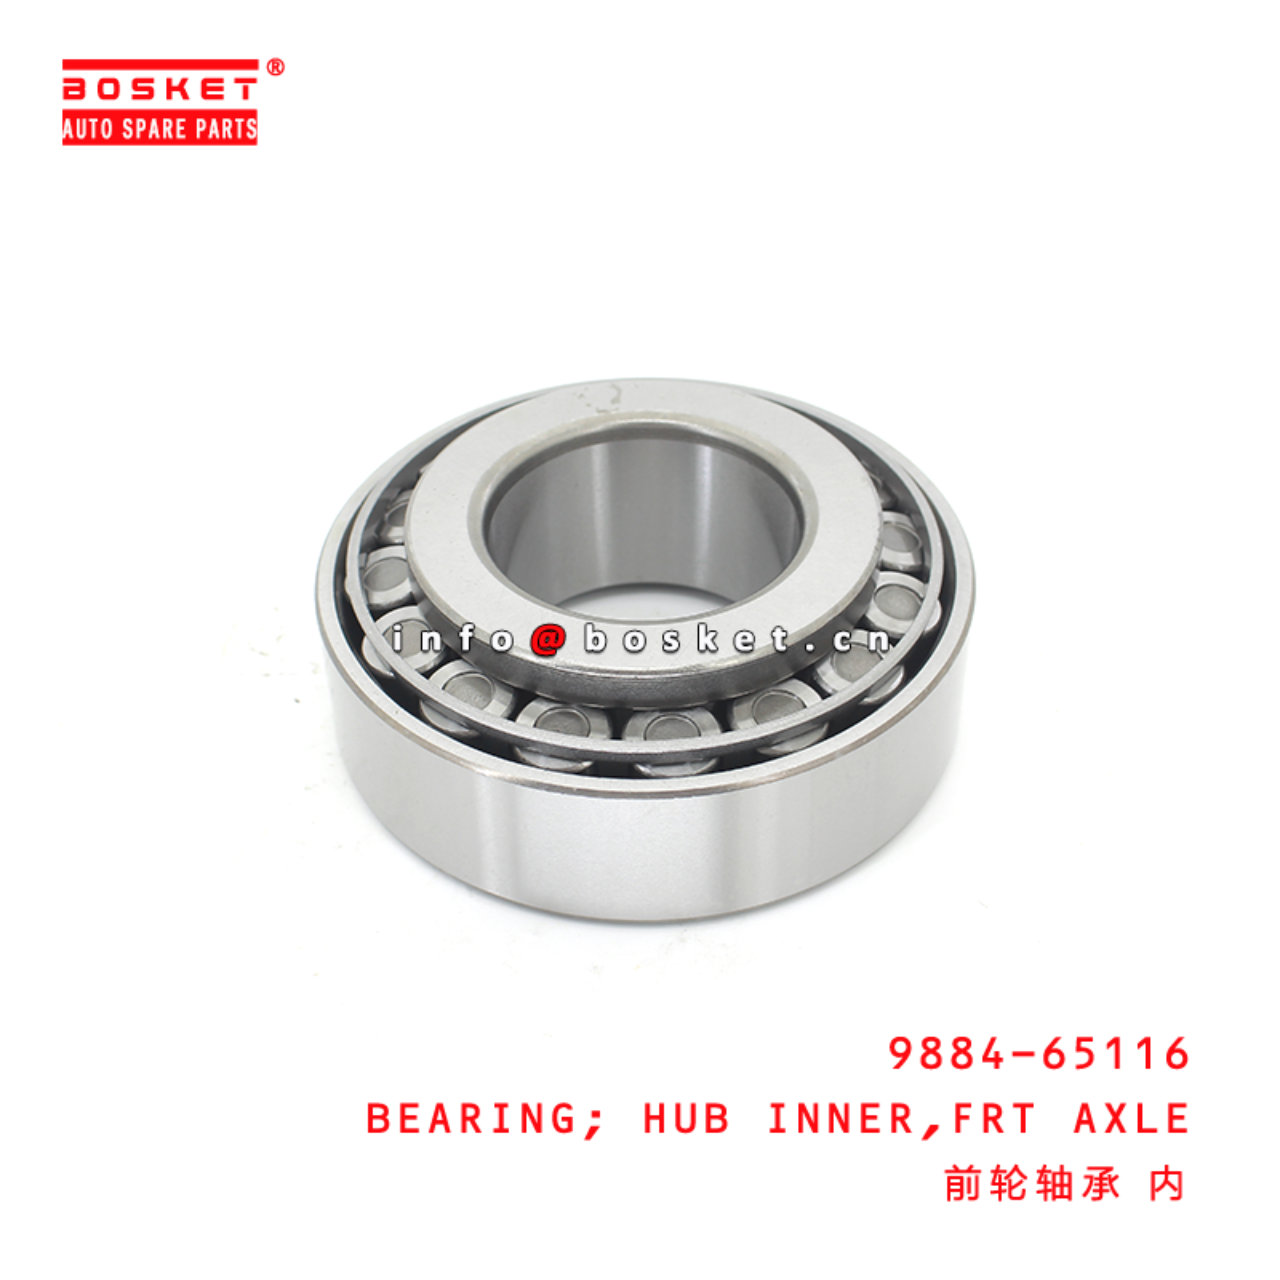 9884-65116 Front Axle Hub Inner Bearing Suitable for ISUZU HINO E13C